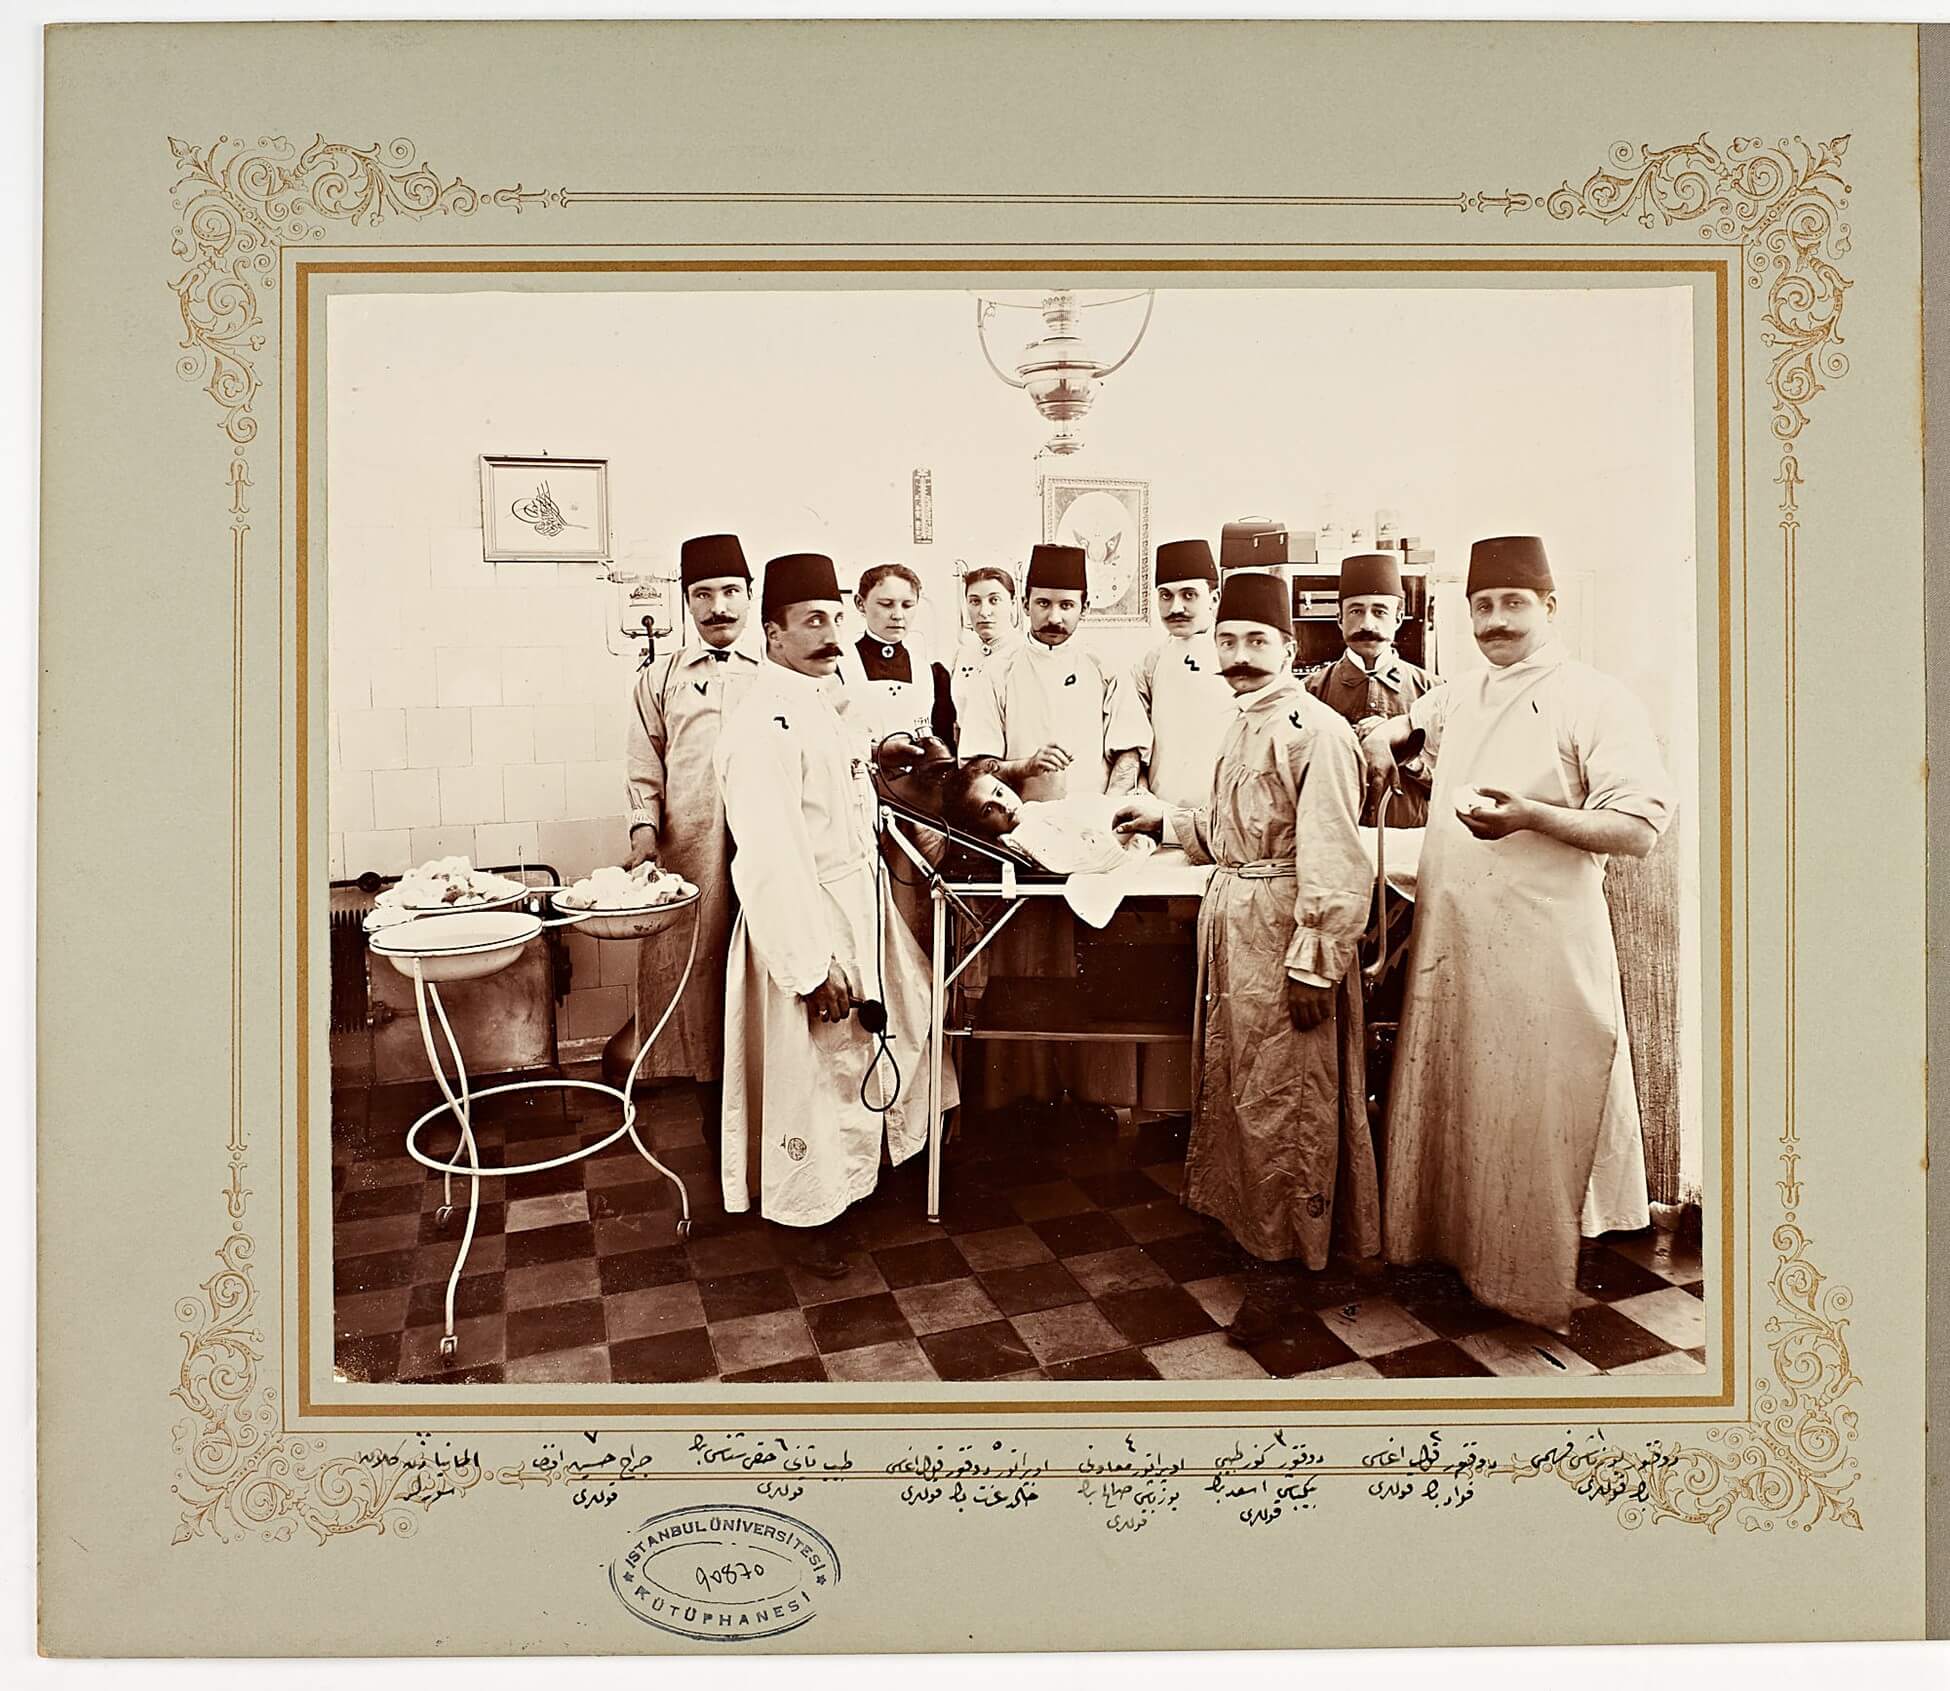 Pediatric Surgery and Ottoman Surgeons during the Hamidian Era